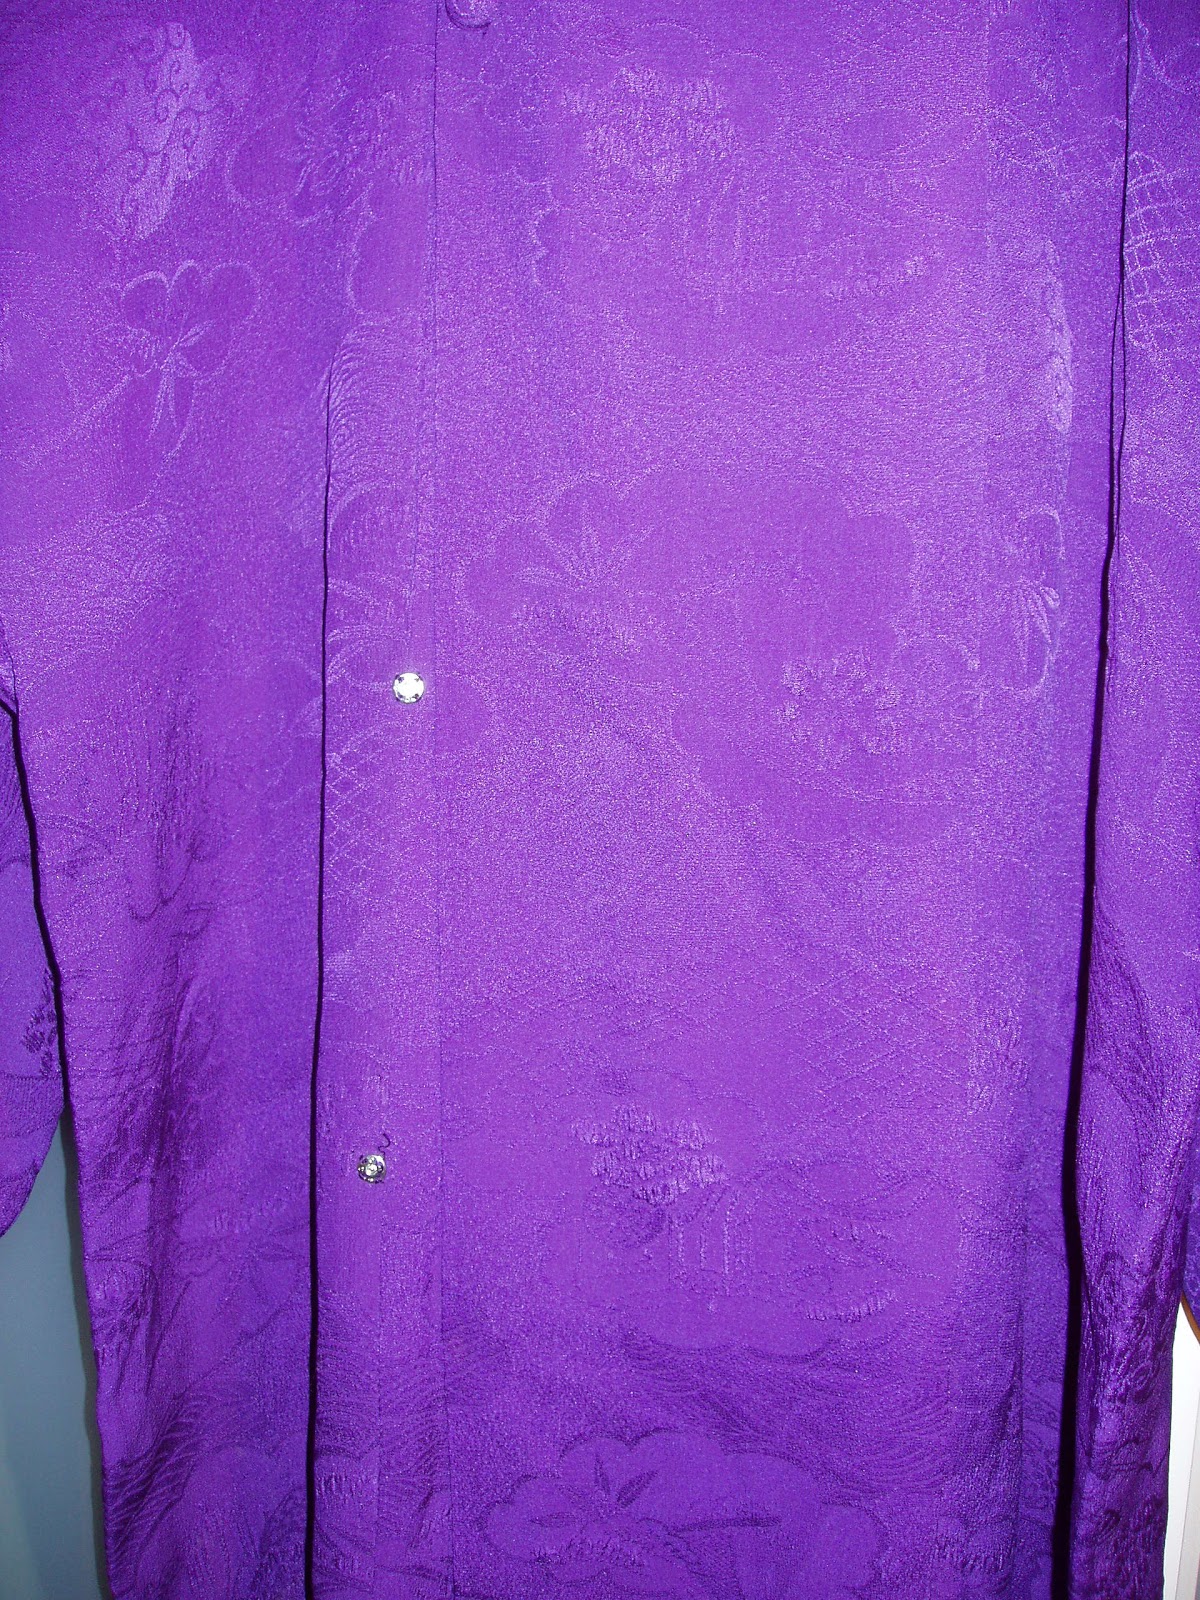 sashiko and other stitching: Silk washing and anatomy of a michiyuki coat